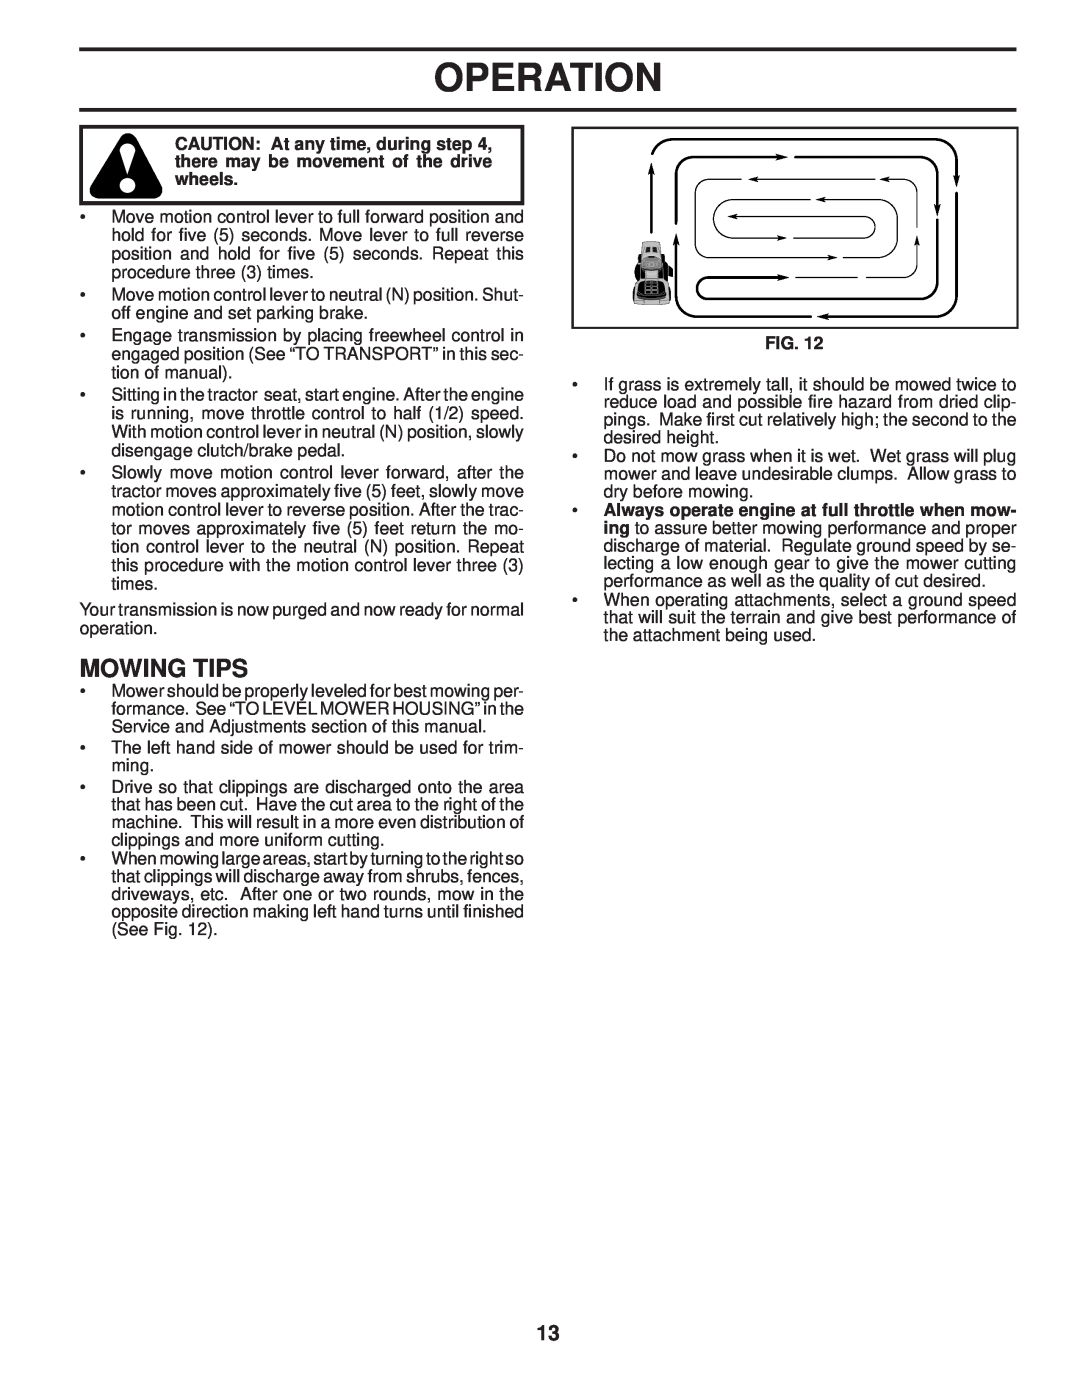 Poulan PB22TH42YT manual Mowing Tips, Operation 